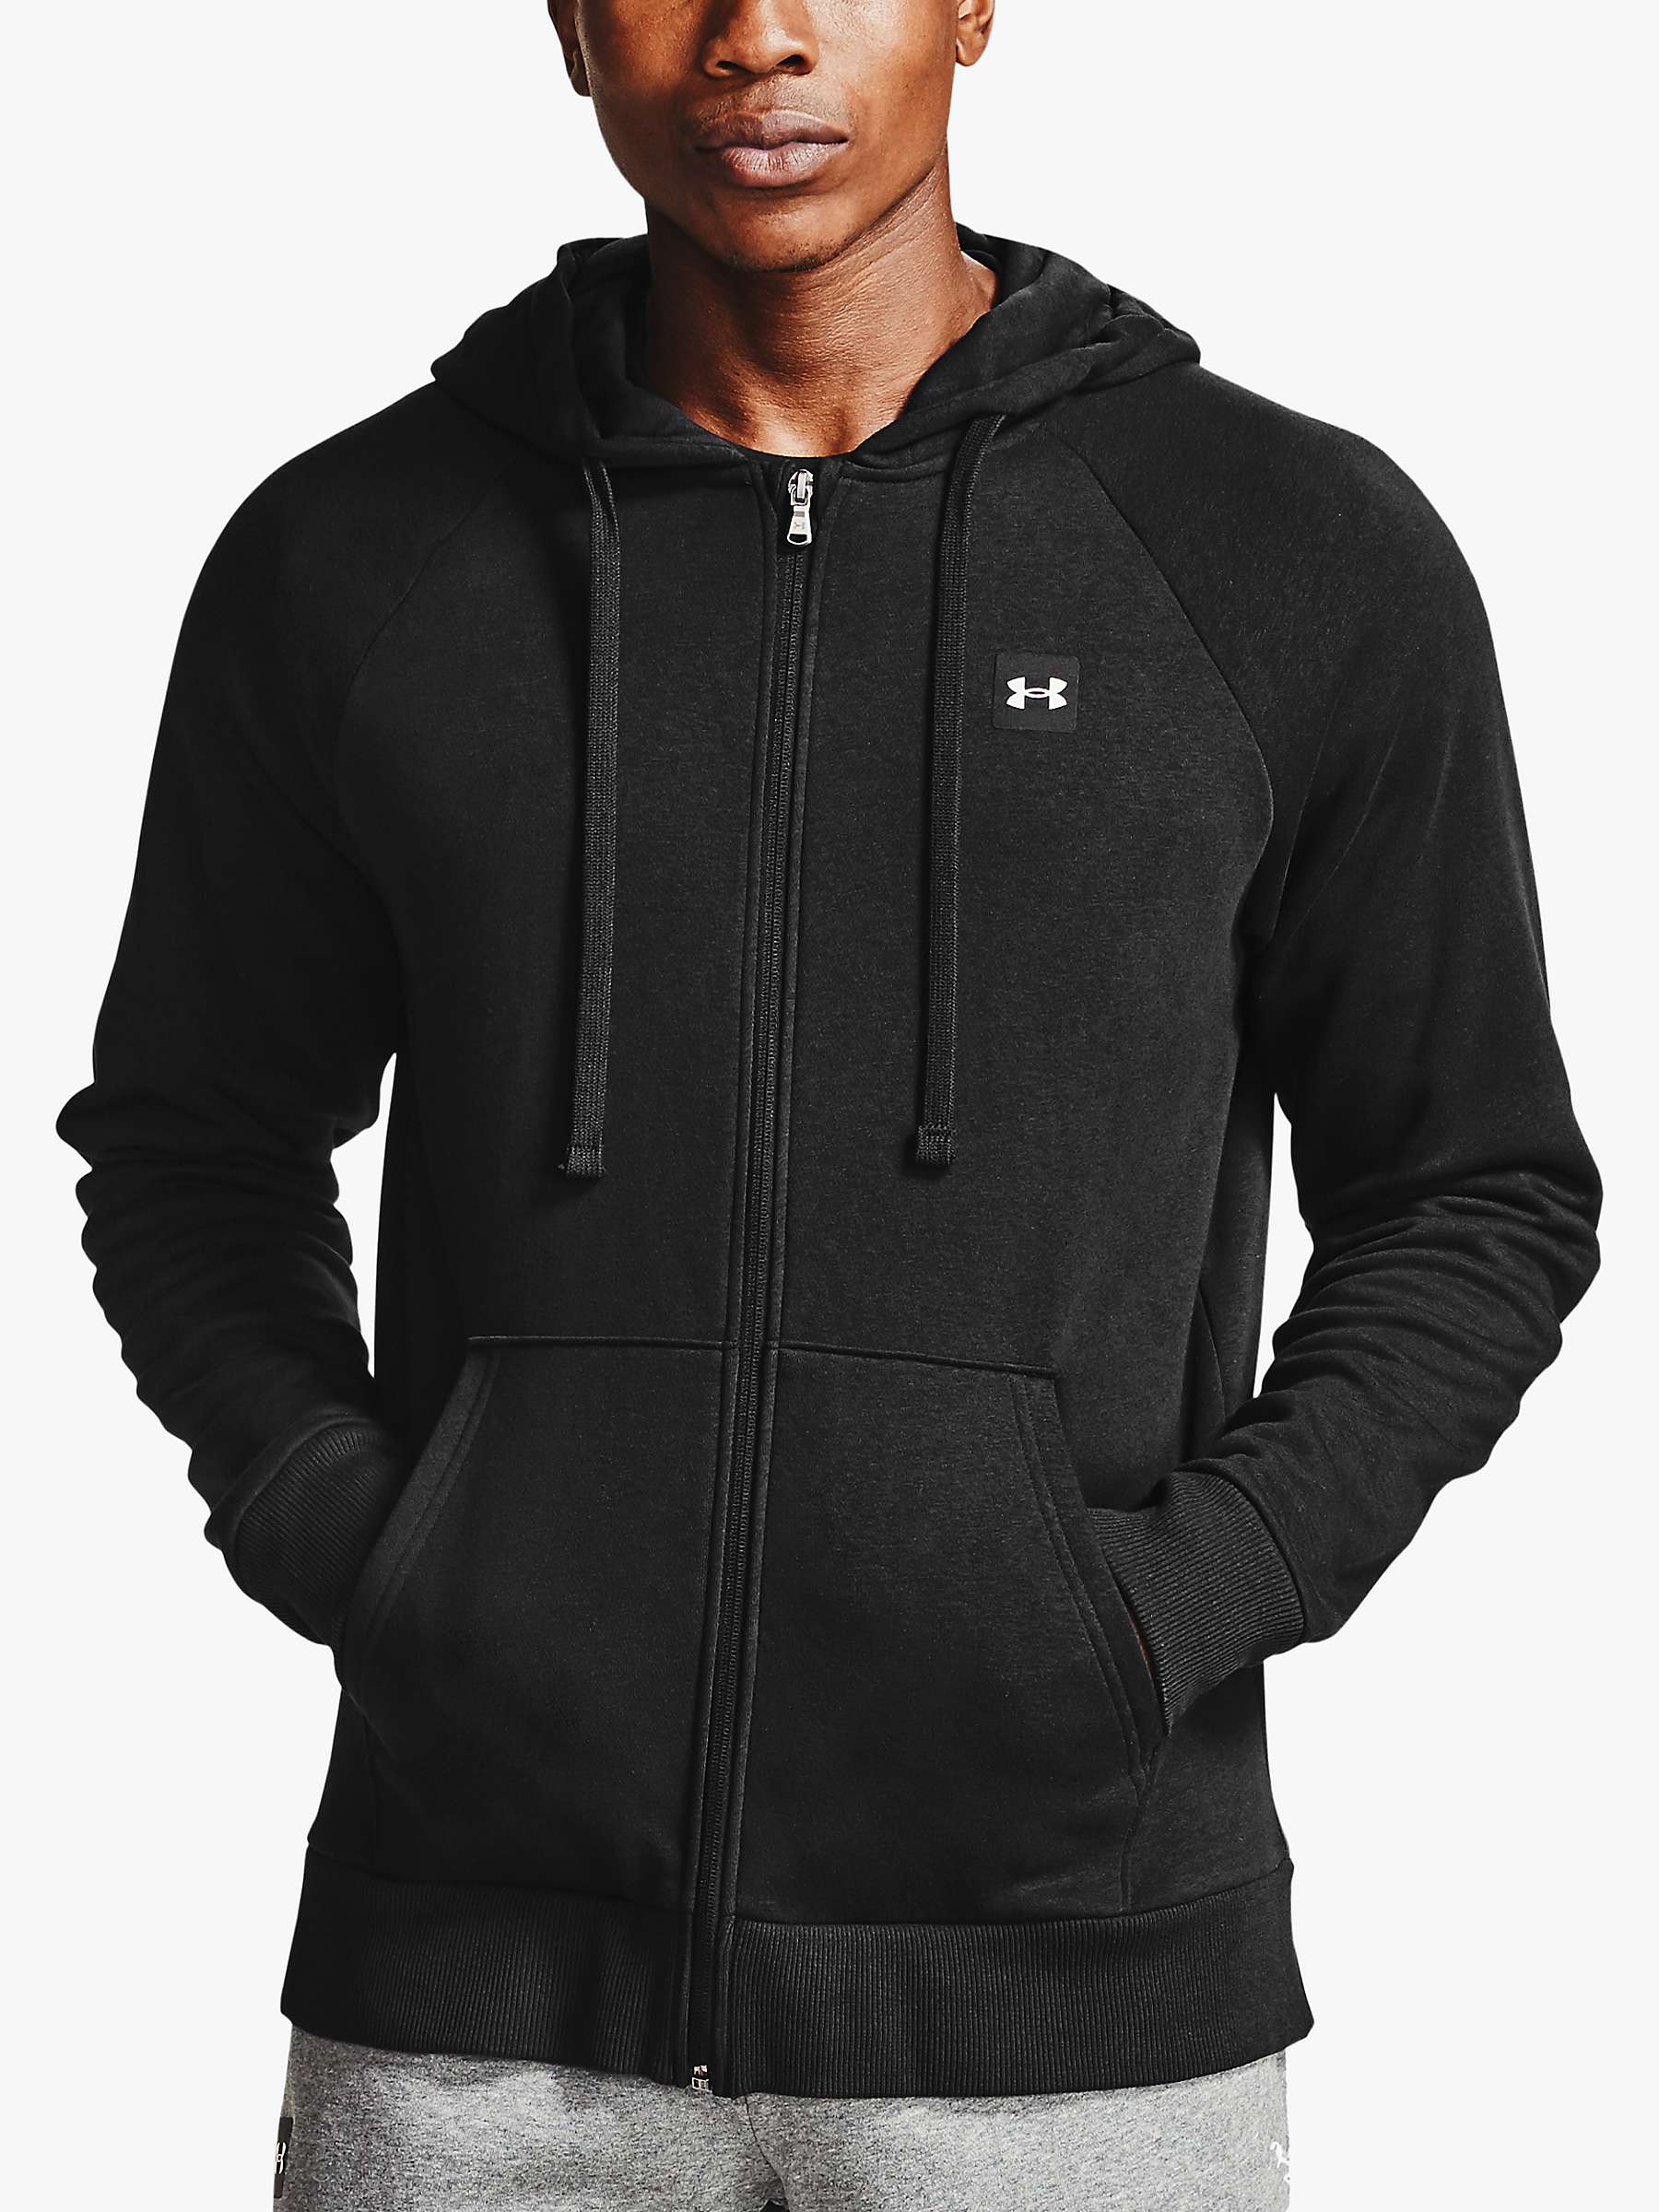 Regular Fit Plain Sport Gym Running Workout Hoodies Jogging Jacket with Pockets Mens Full-Zip Up Hooded Sweatshirt 